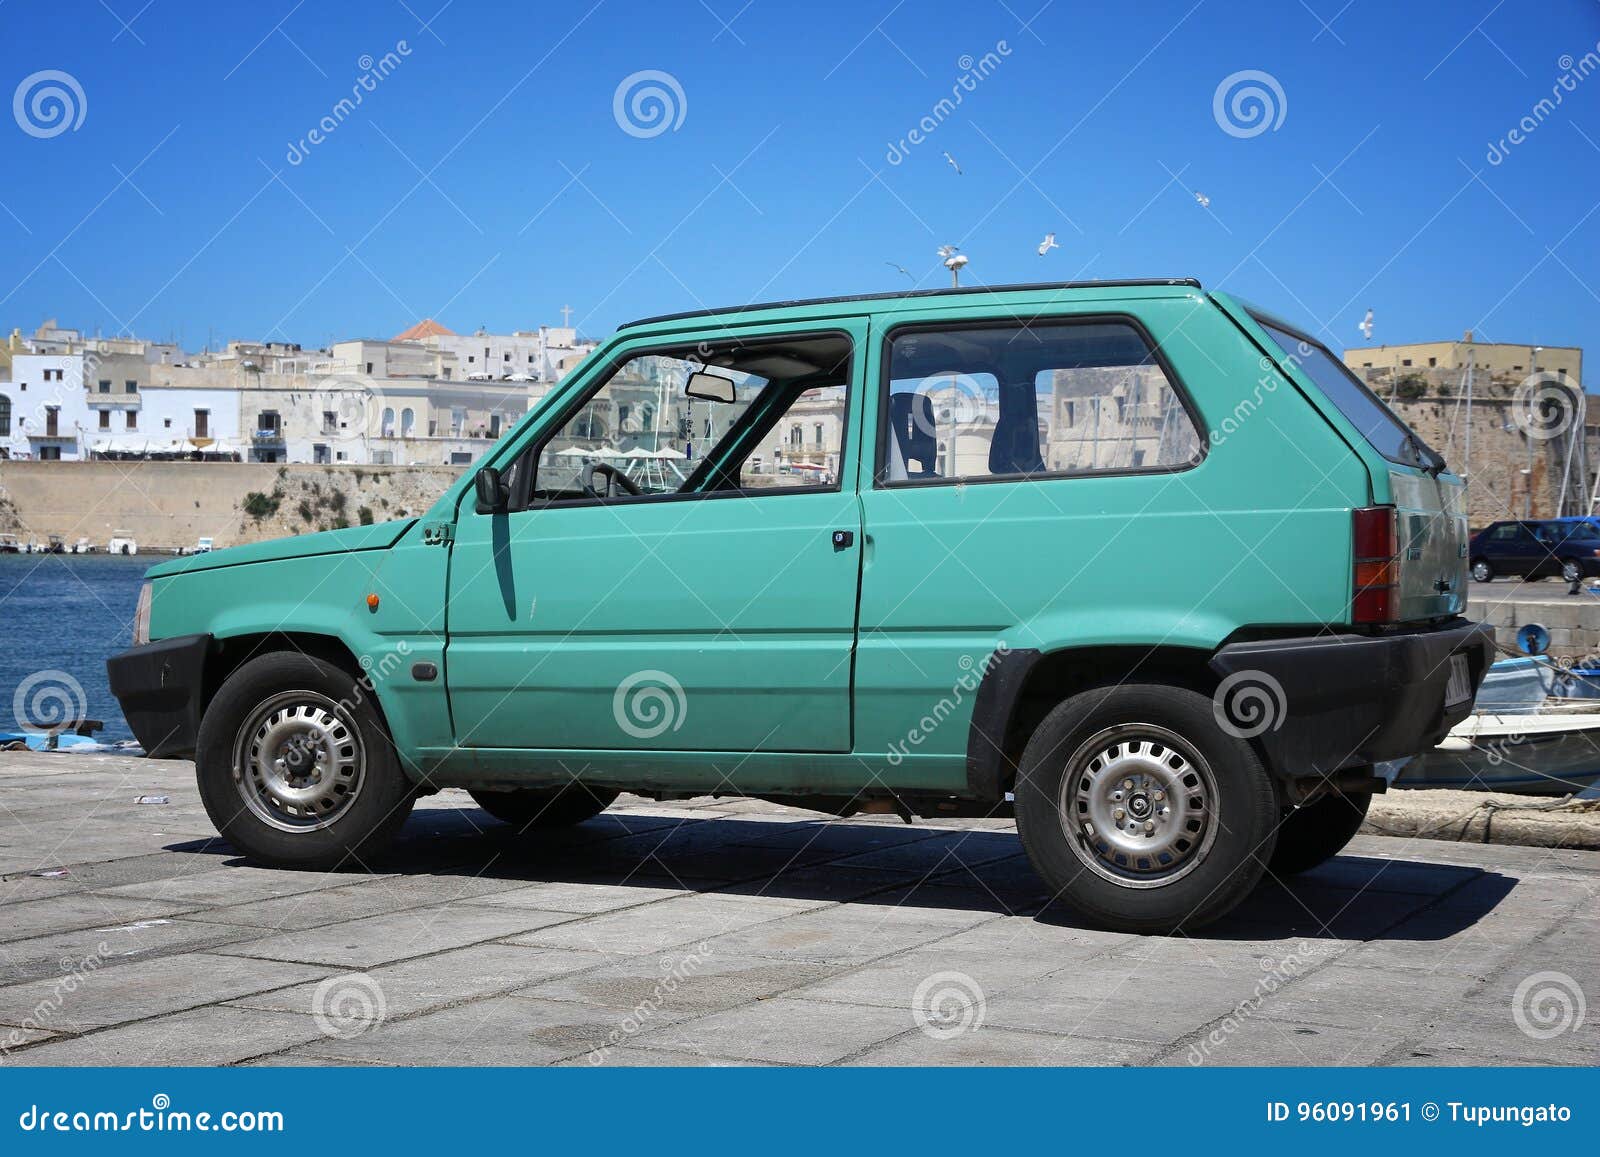 Old Fiat Panda editorial photo. Image of automotive, hatchback - 96091961